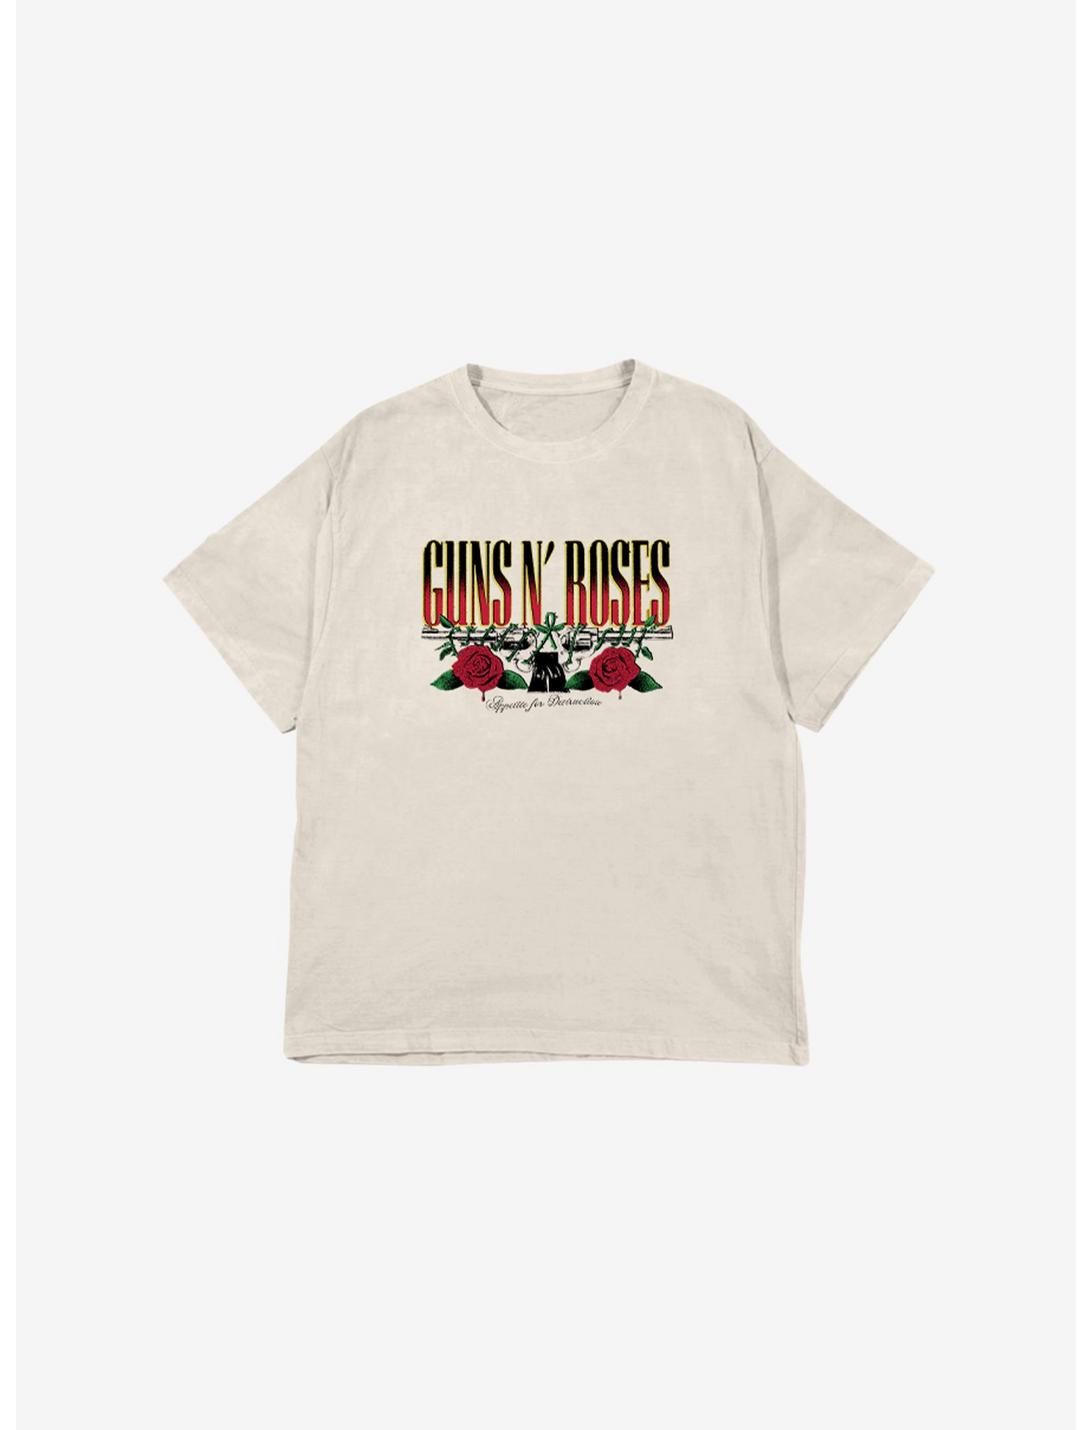 Guns N' Roses Logo Boyfriend Fit Girls T-Shirt, NATURAL, hi-res